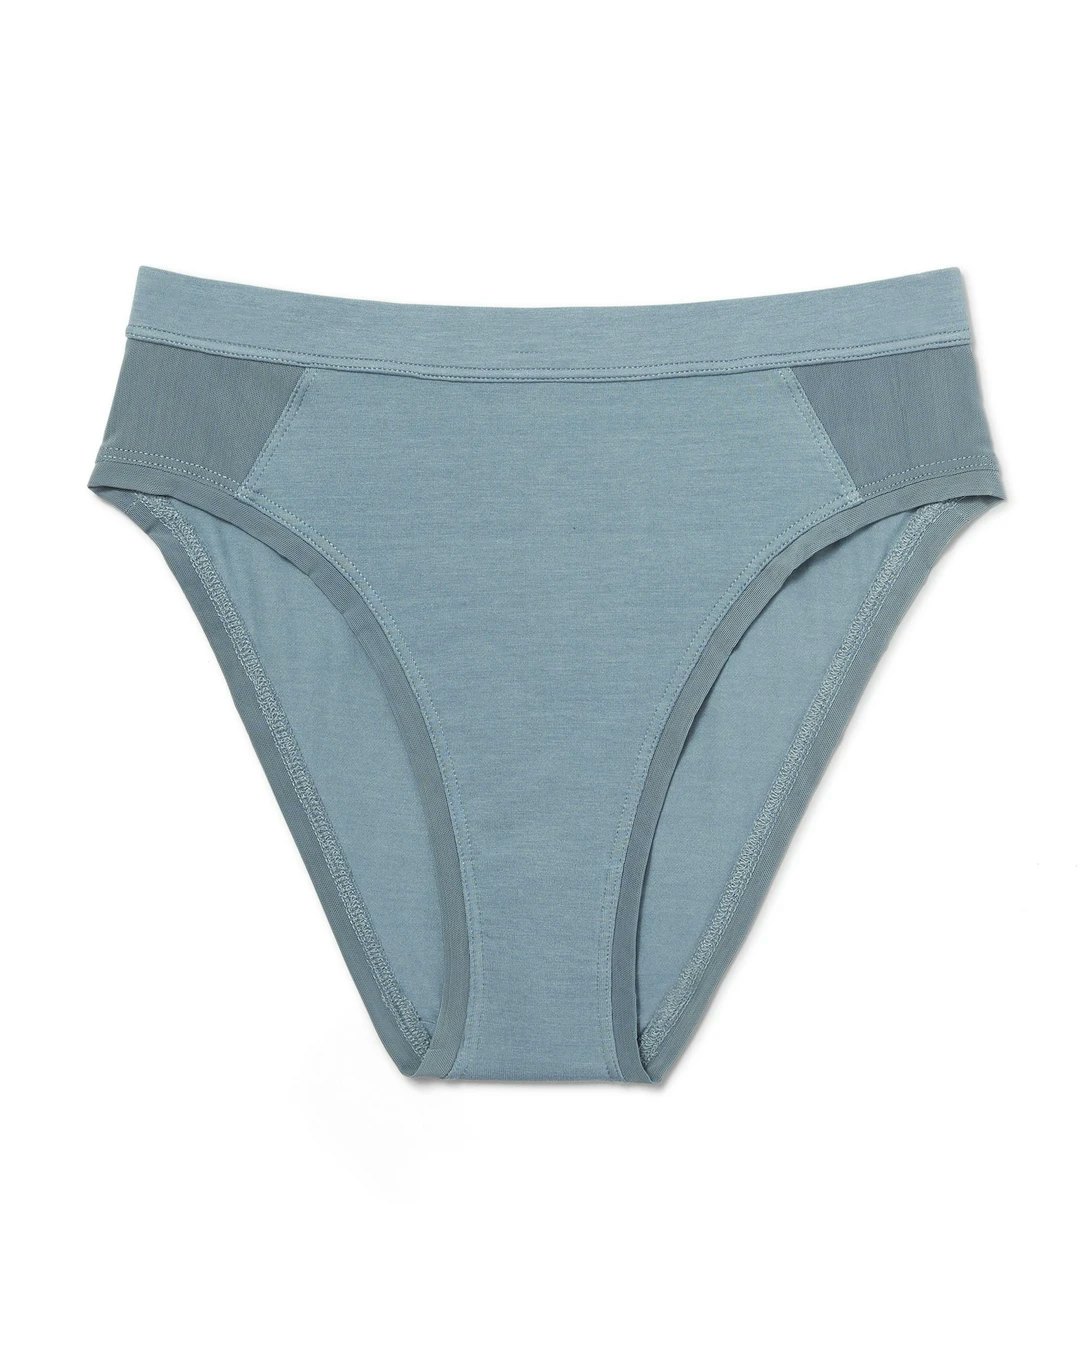 100% organic cotton thong underwear, oddobody